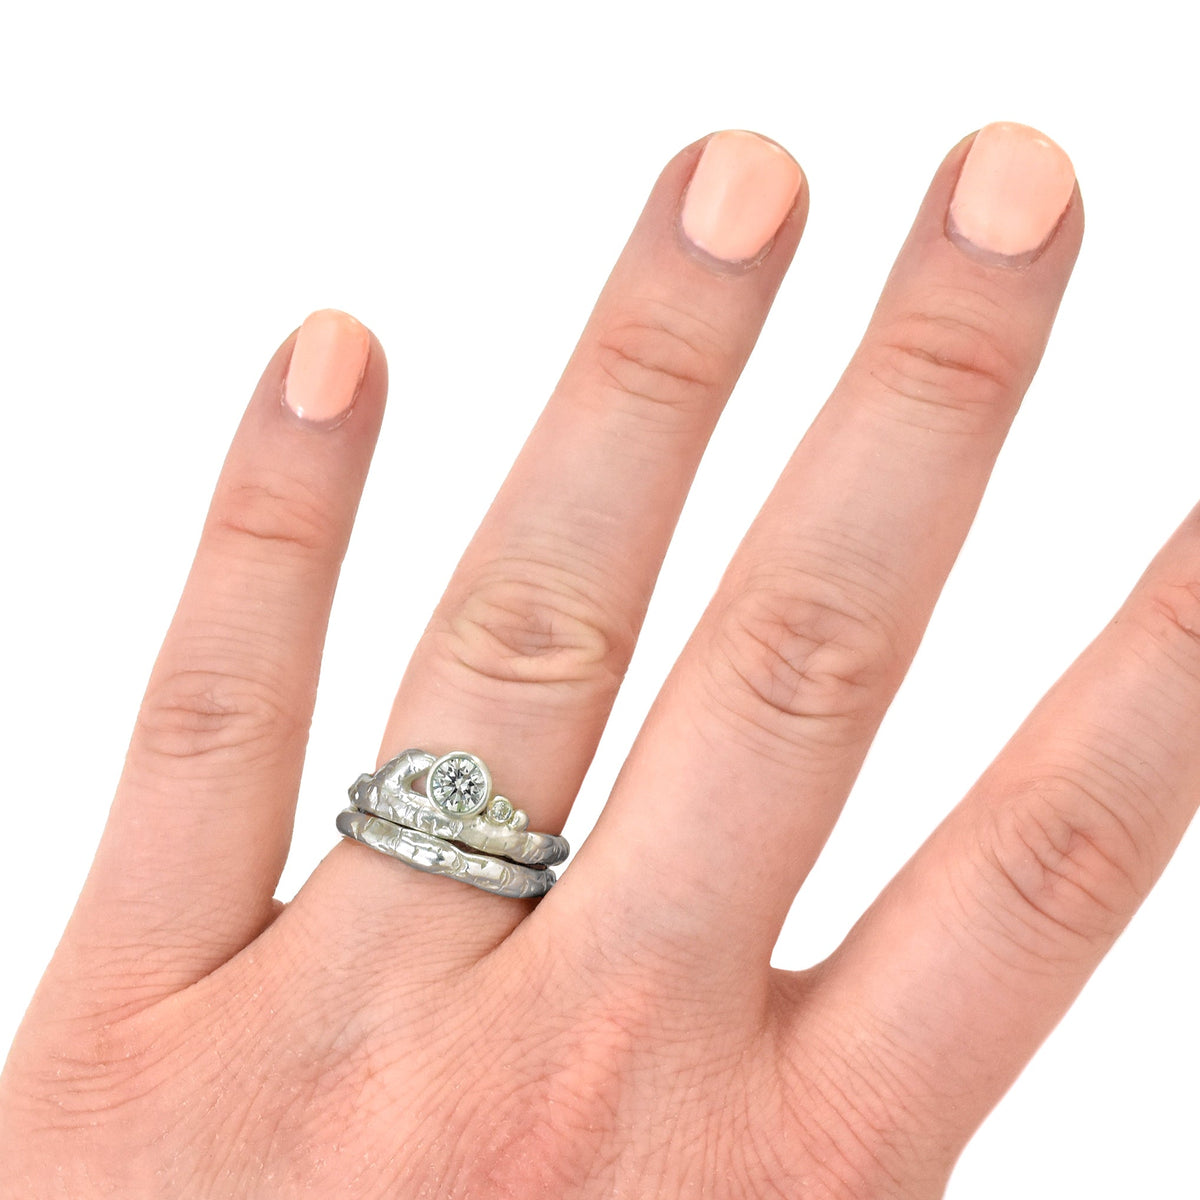 Gold Diamond Birch Twig Ring - your choice of 5mm stone & gold - Wedding Ring Lab Created Diamond / 18K Palladium White Gold Lab Created Diamond / 14K Rose Gold 6290 - handmade by Beth Millner Jewelry